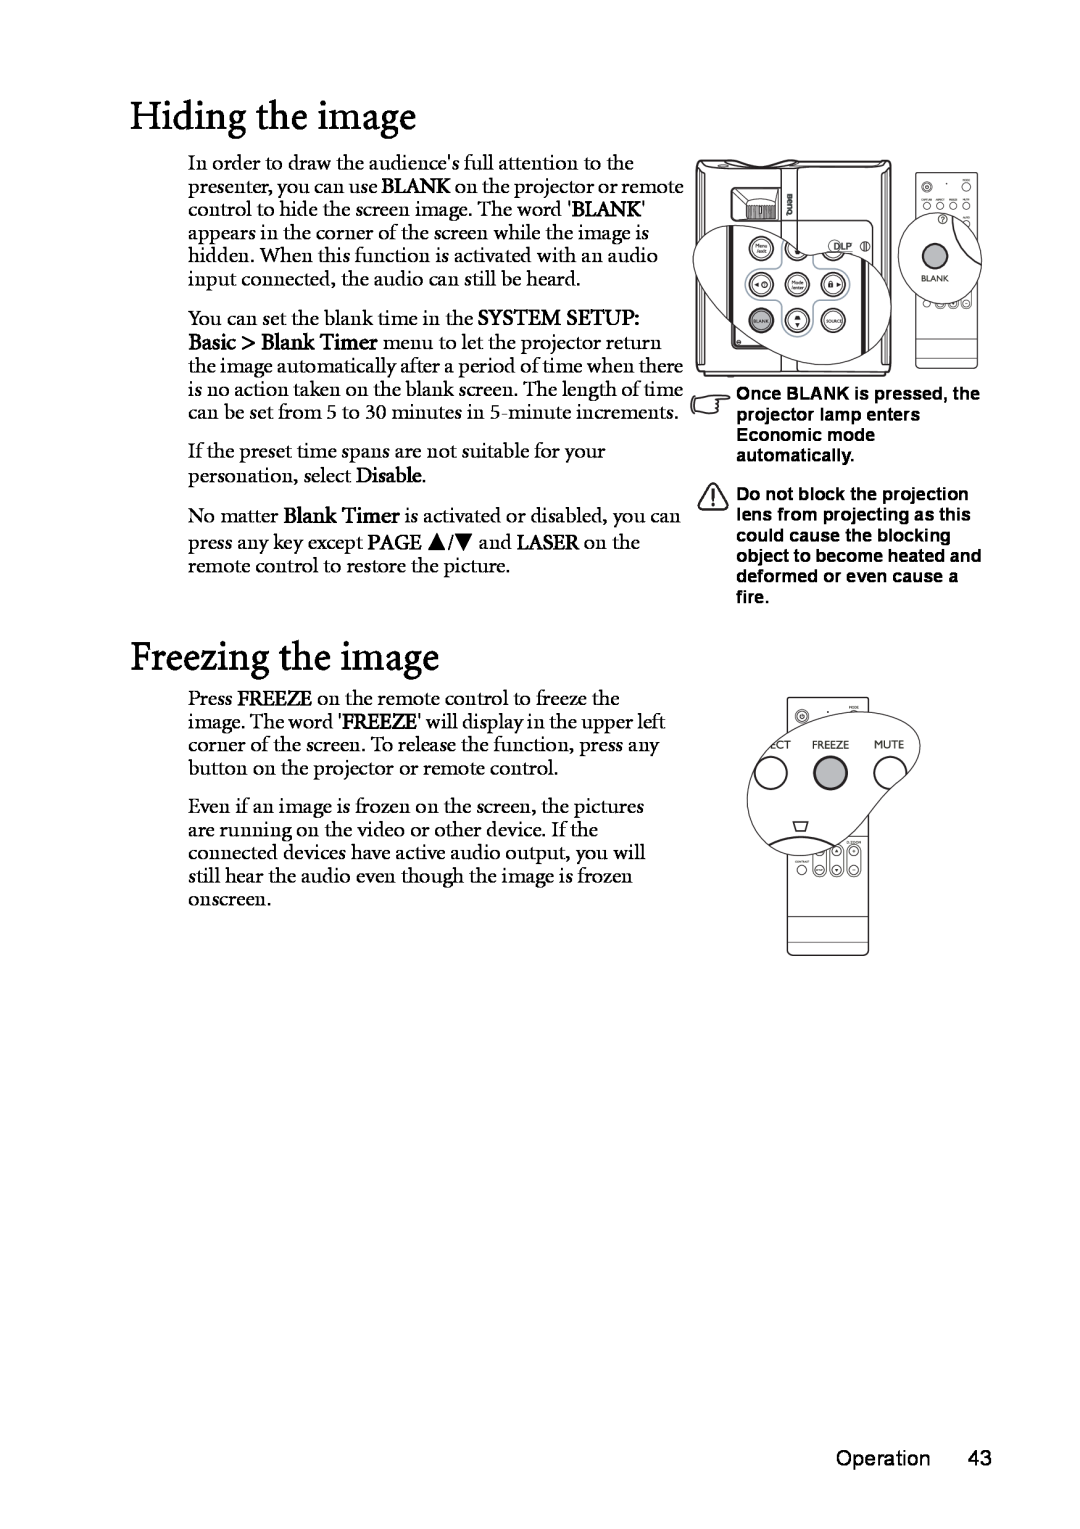 BenQ MP730 manual Hiding the image, Freezing the image 